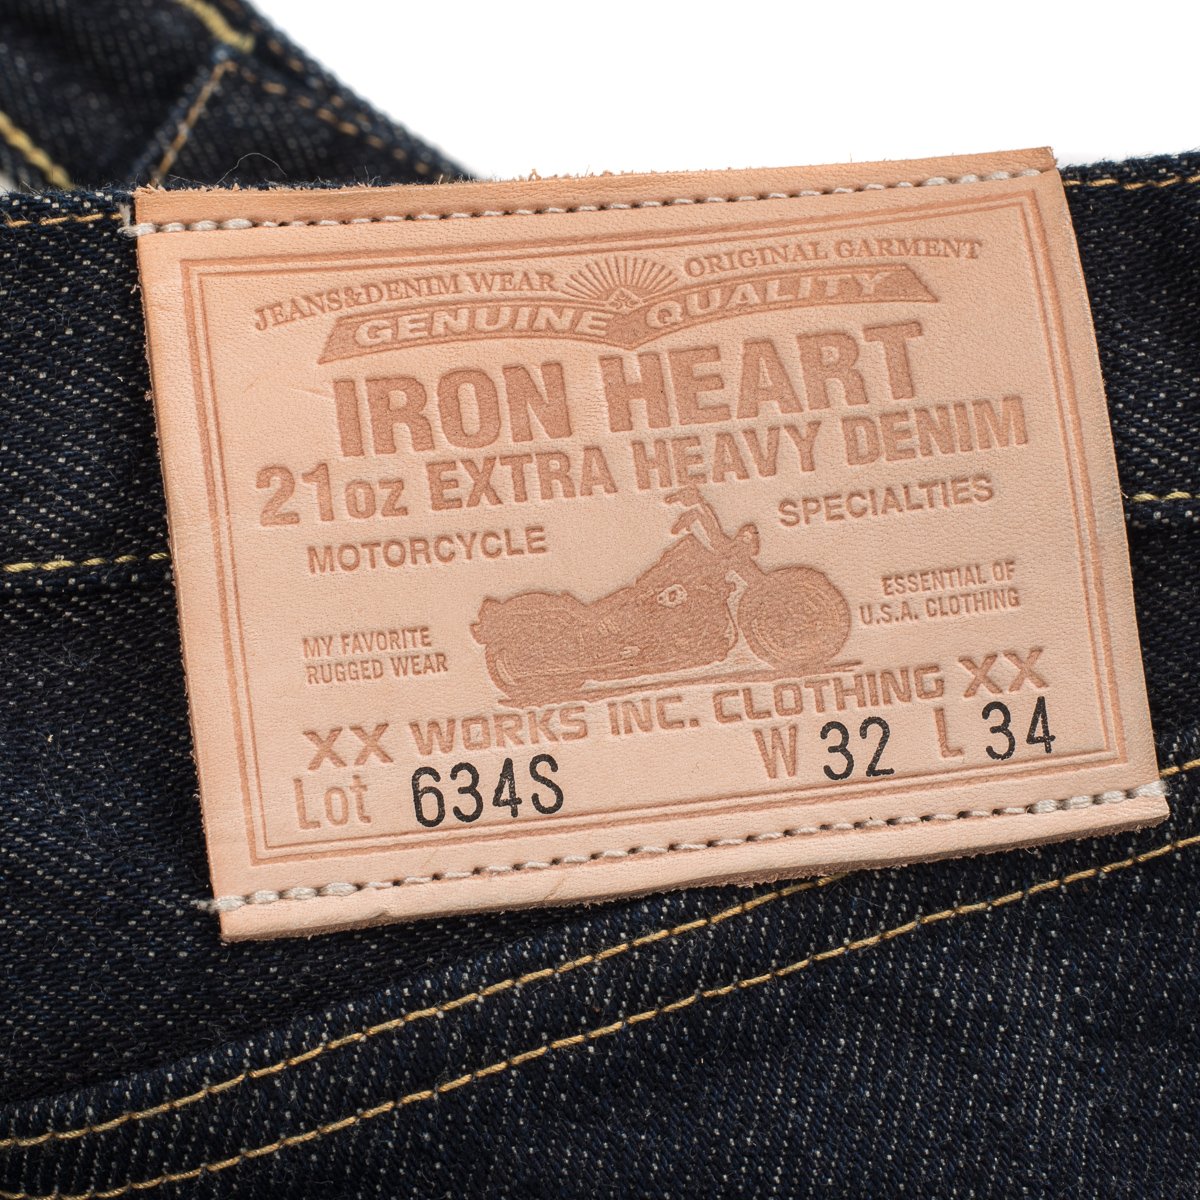 Iron Heart 21oz Selvedge Denim Straight Cut Jeans - Indigo